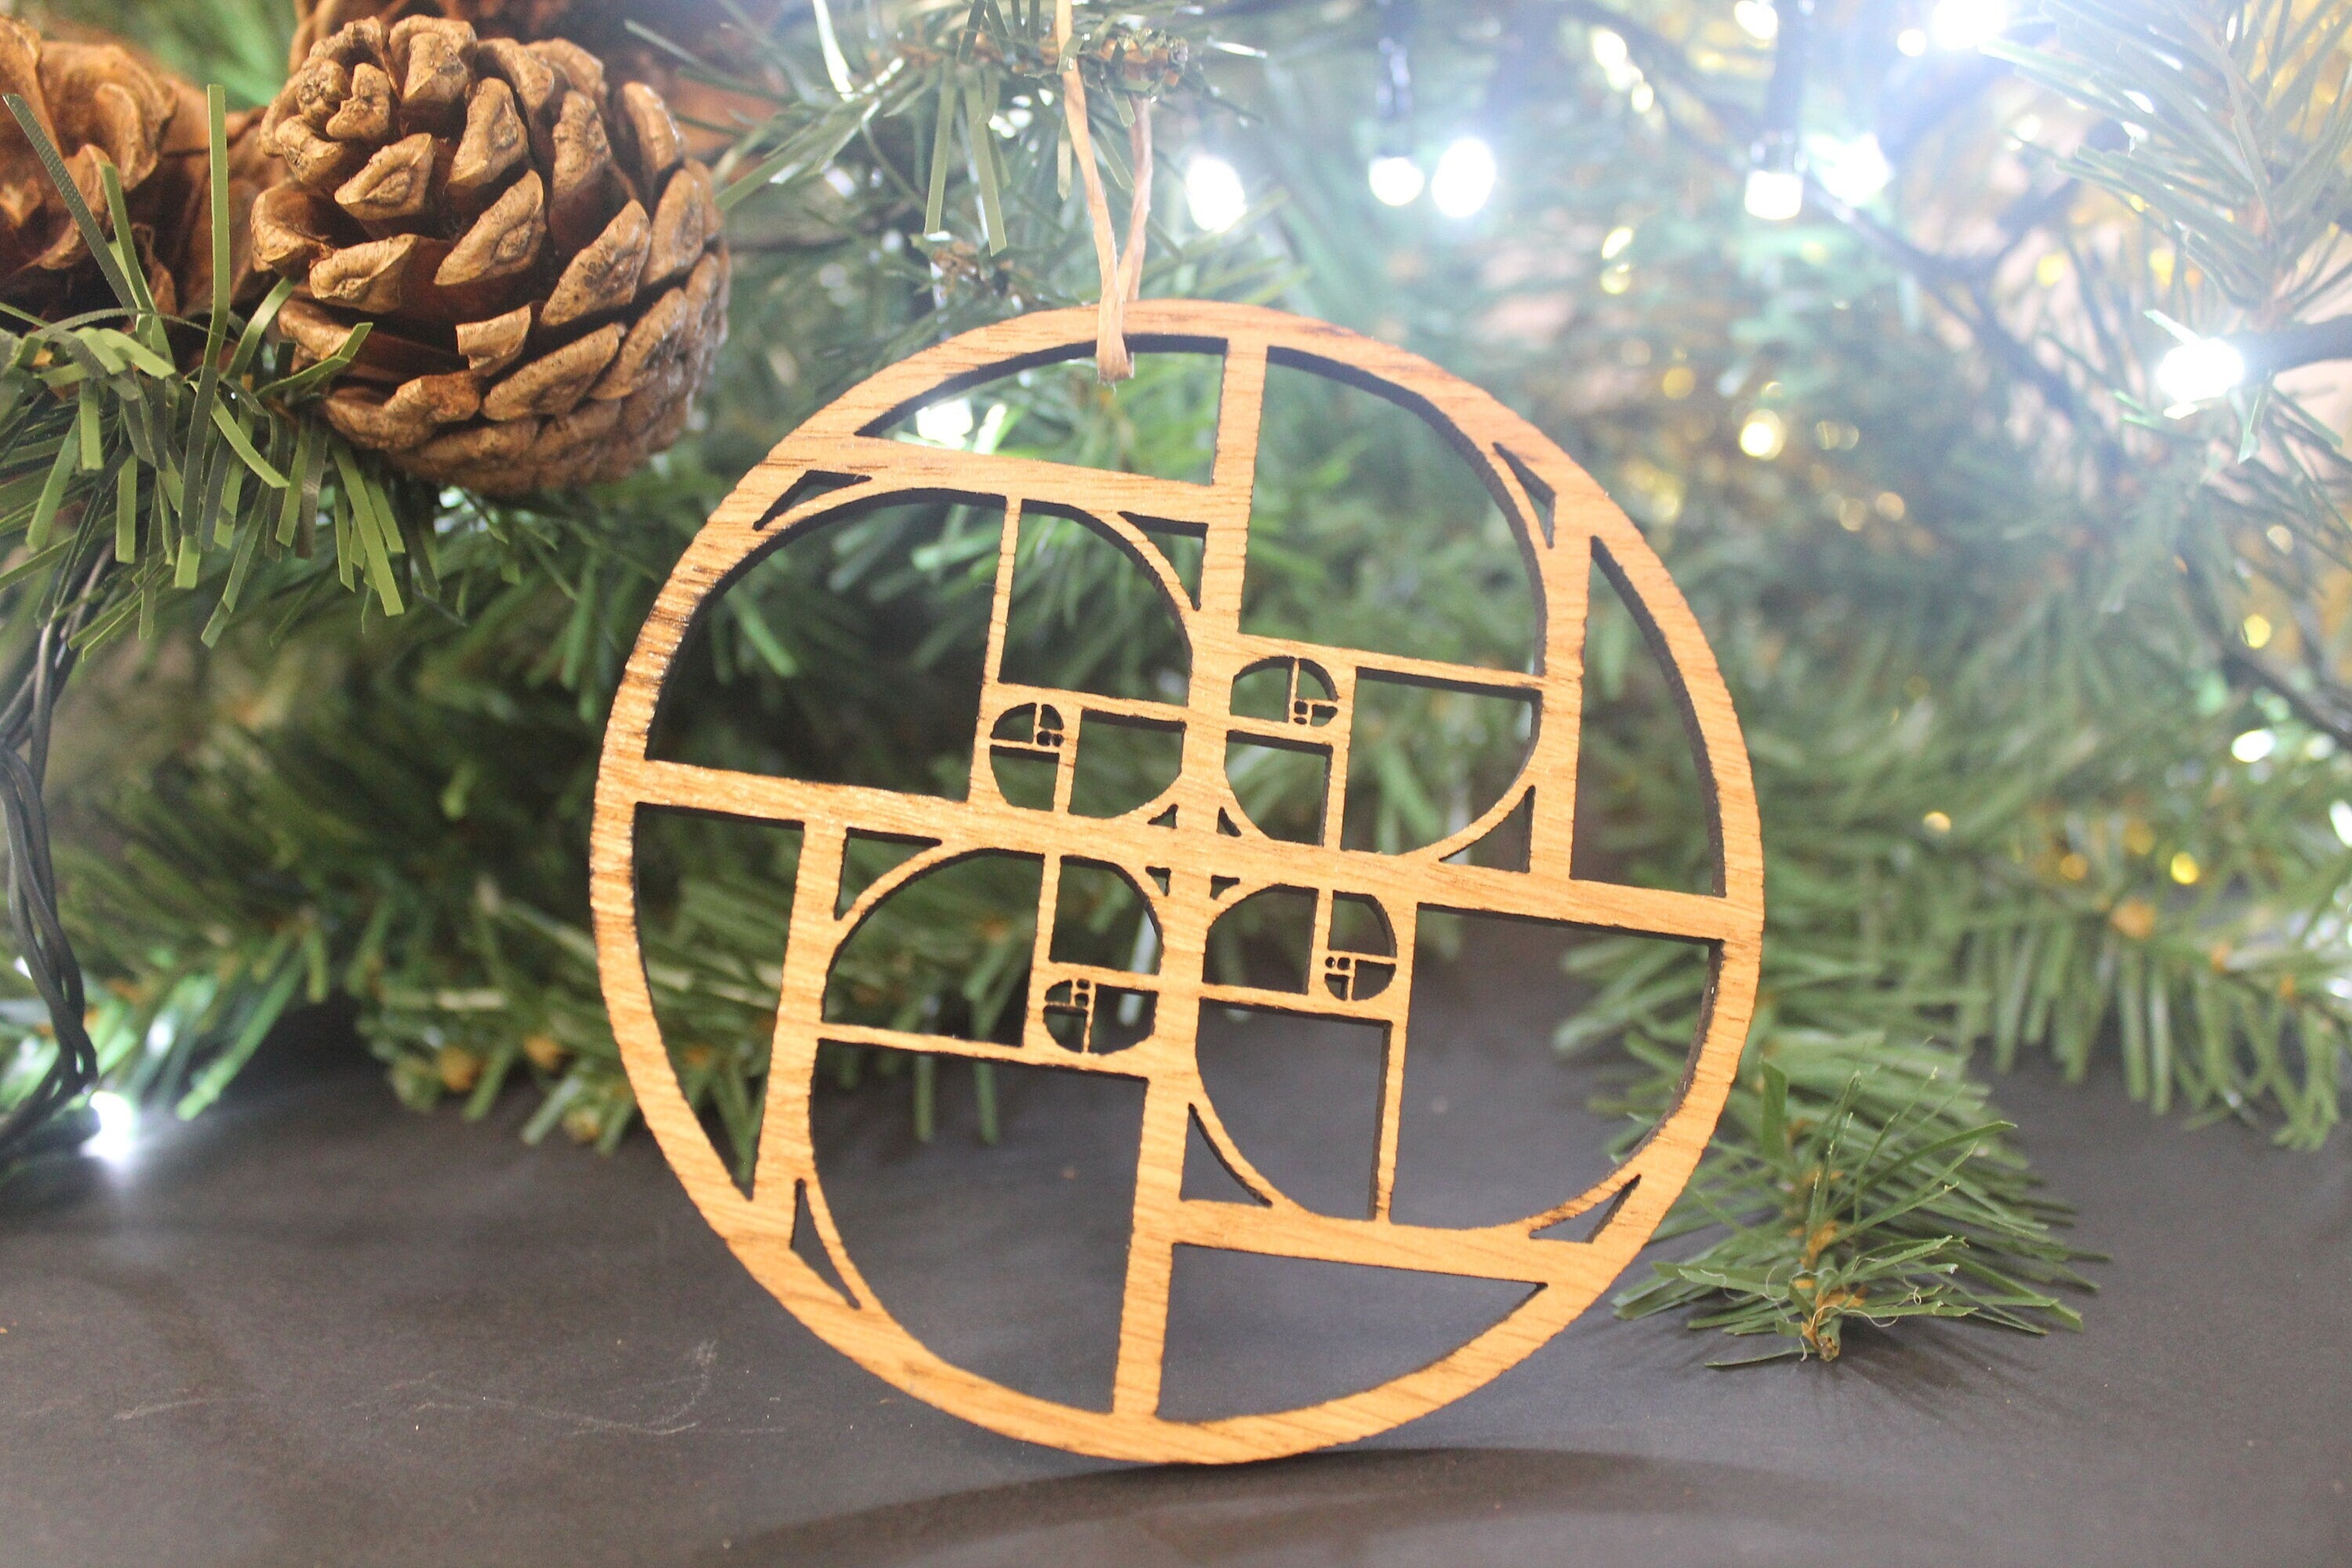 Christmas Tree Decoration Fibonacci Golden Ratio Phi Sacred Geometry Laser Cut Set of 4